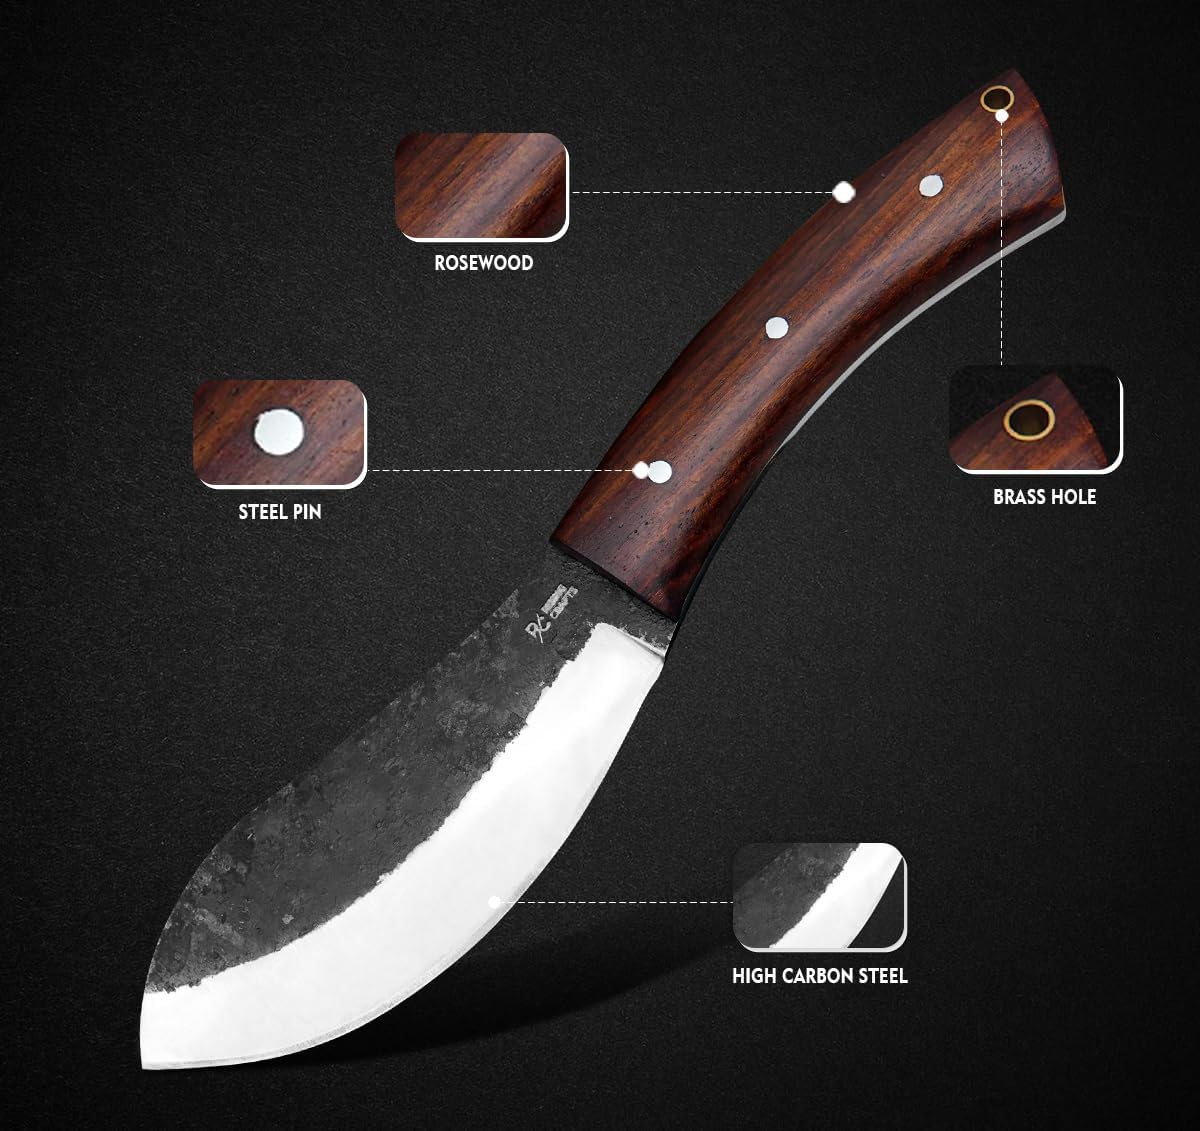 KD Hunting Knife Handmade Bushcraft High Carbon Steel Knife With Sheath